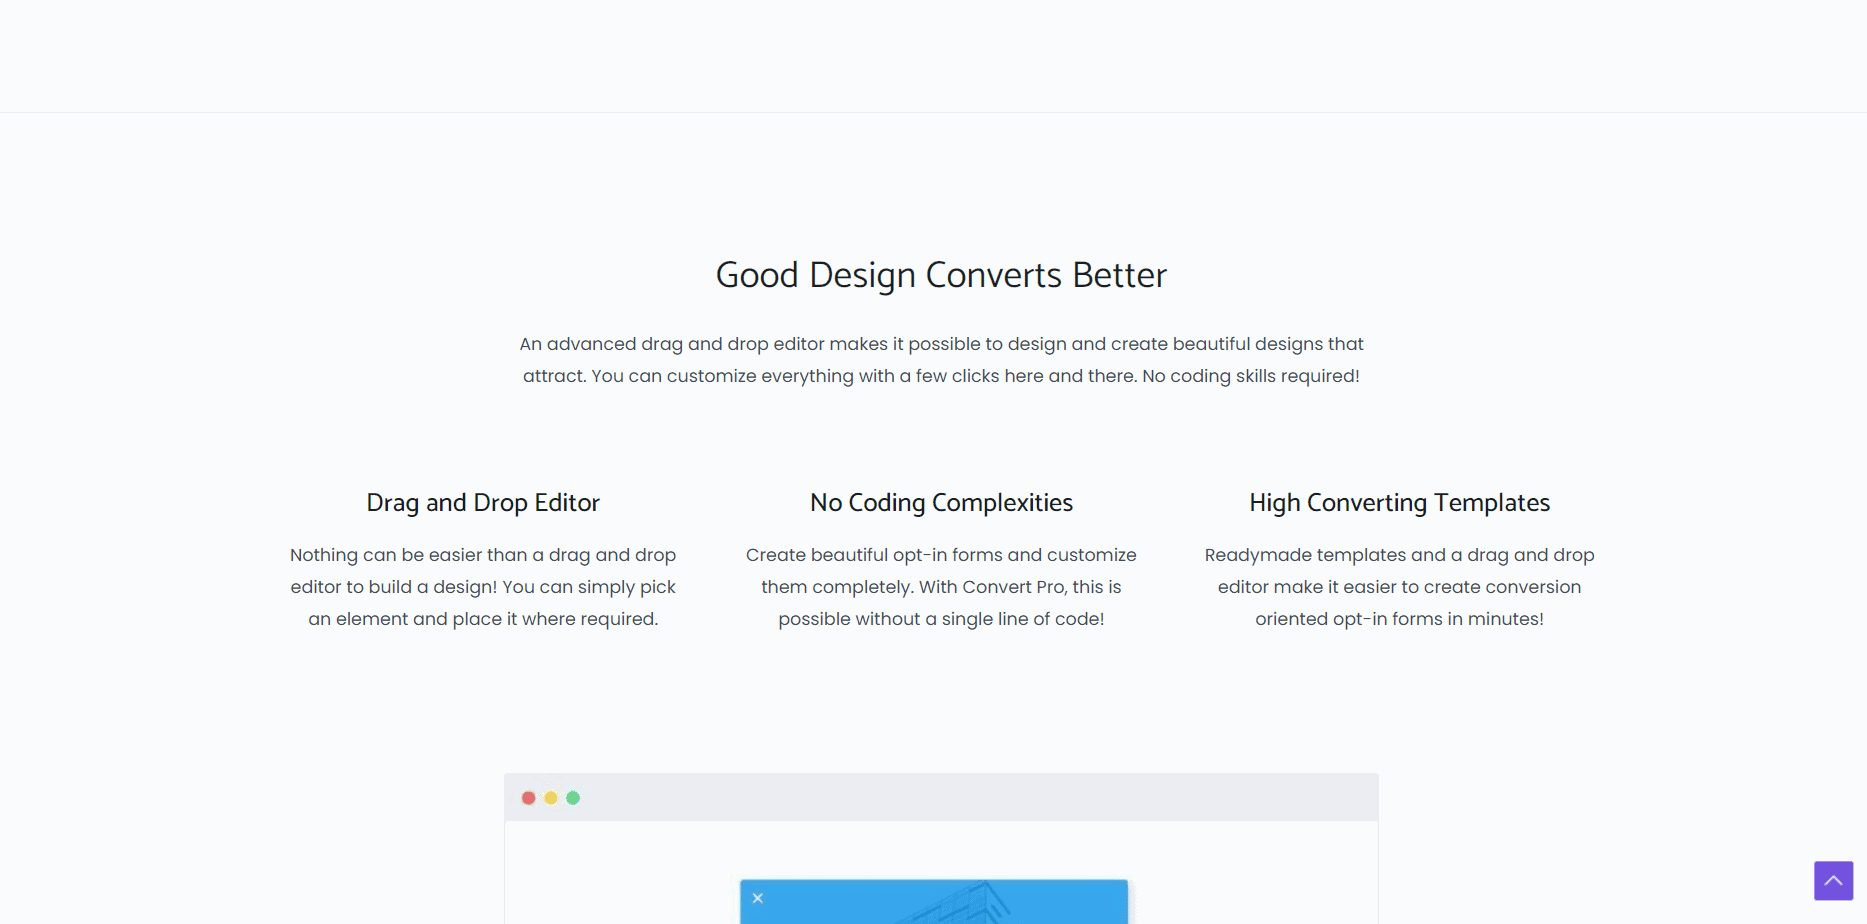 Convert Pro features